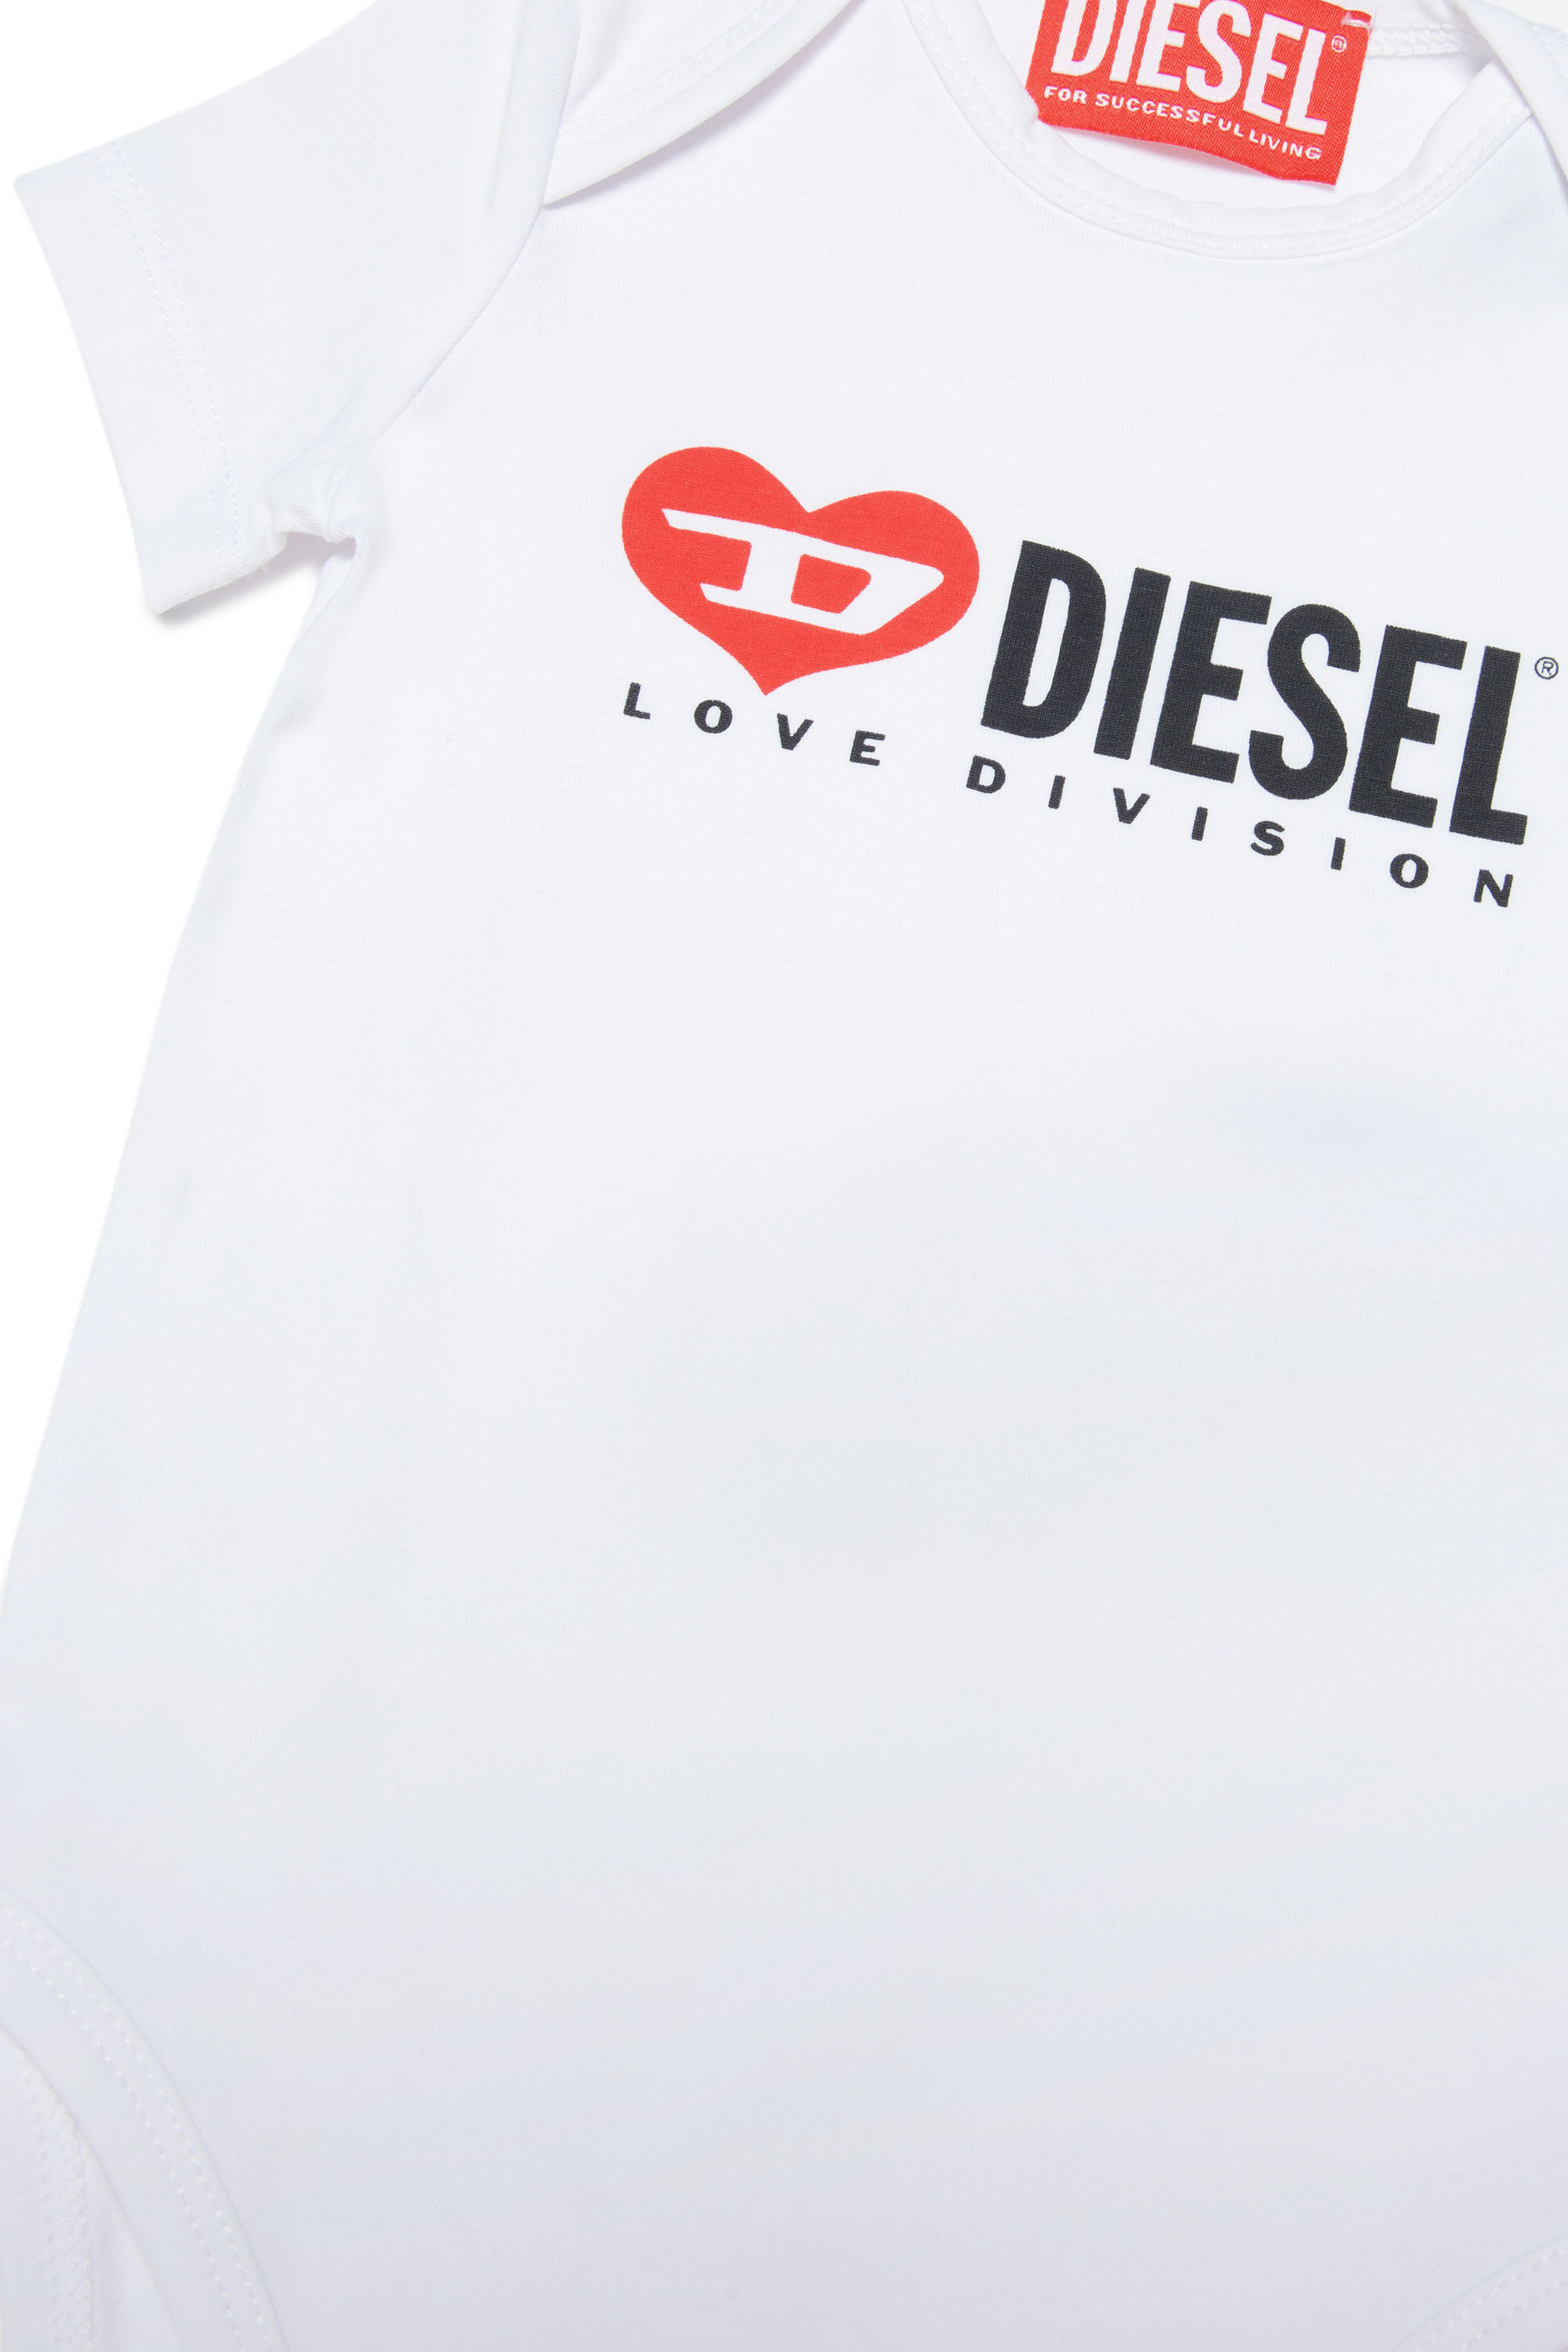 Diesel - ULOVE-NB, White - Image 3